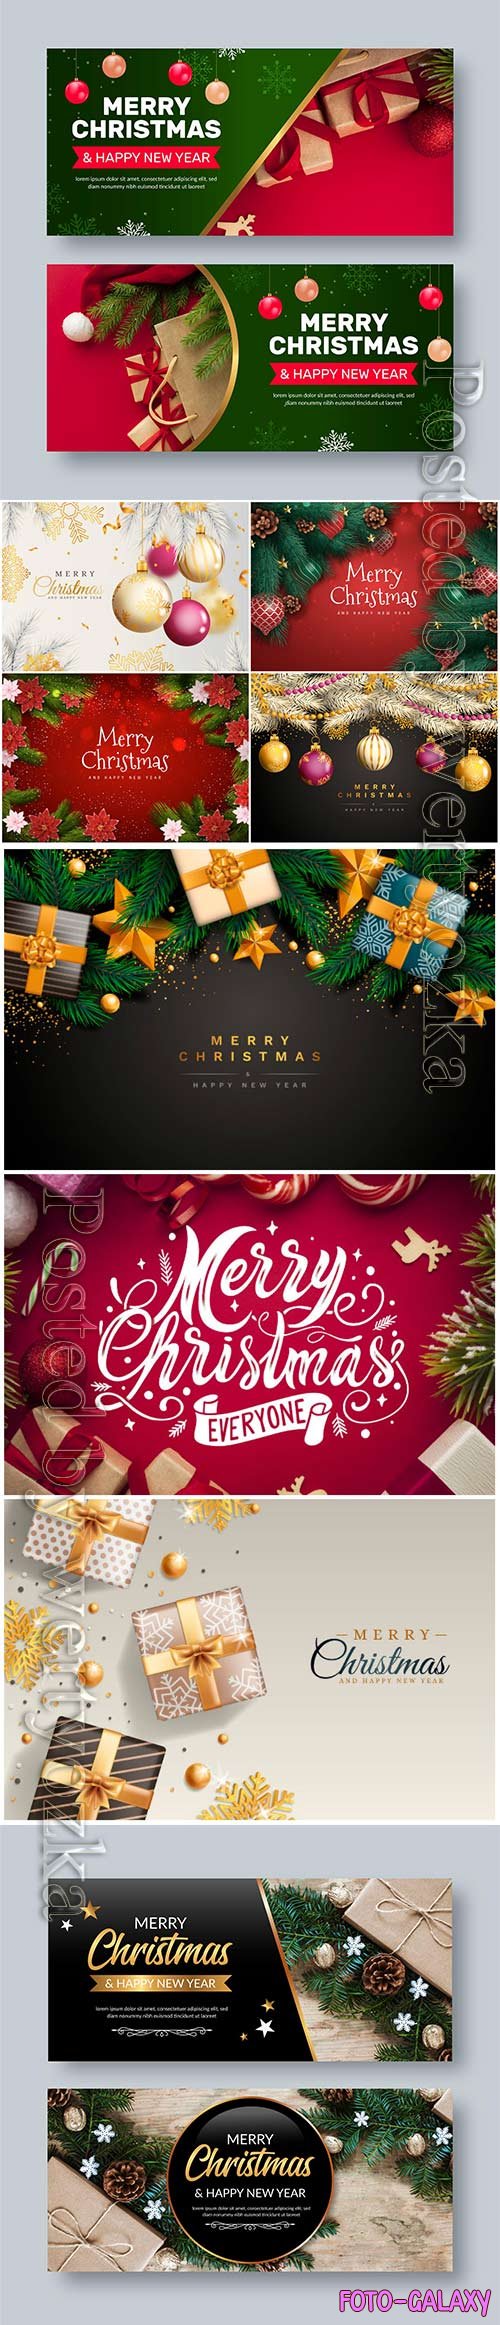 Christmas banners with image